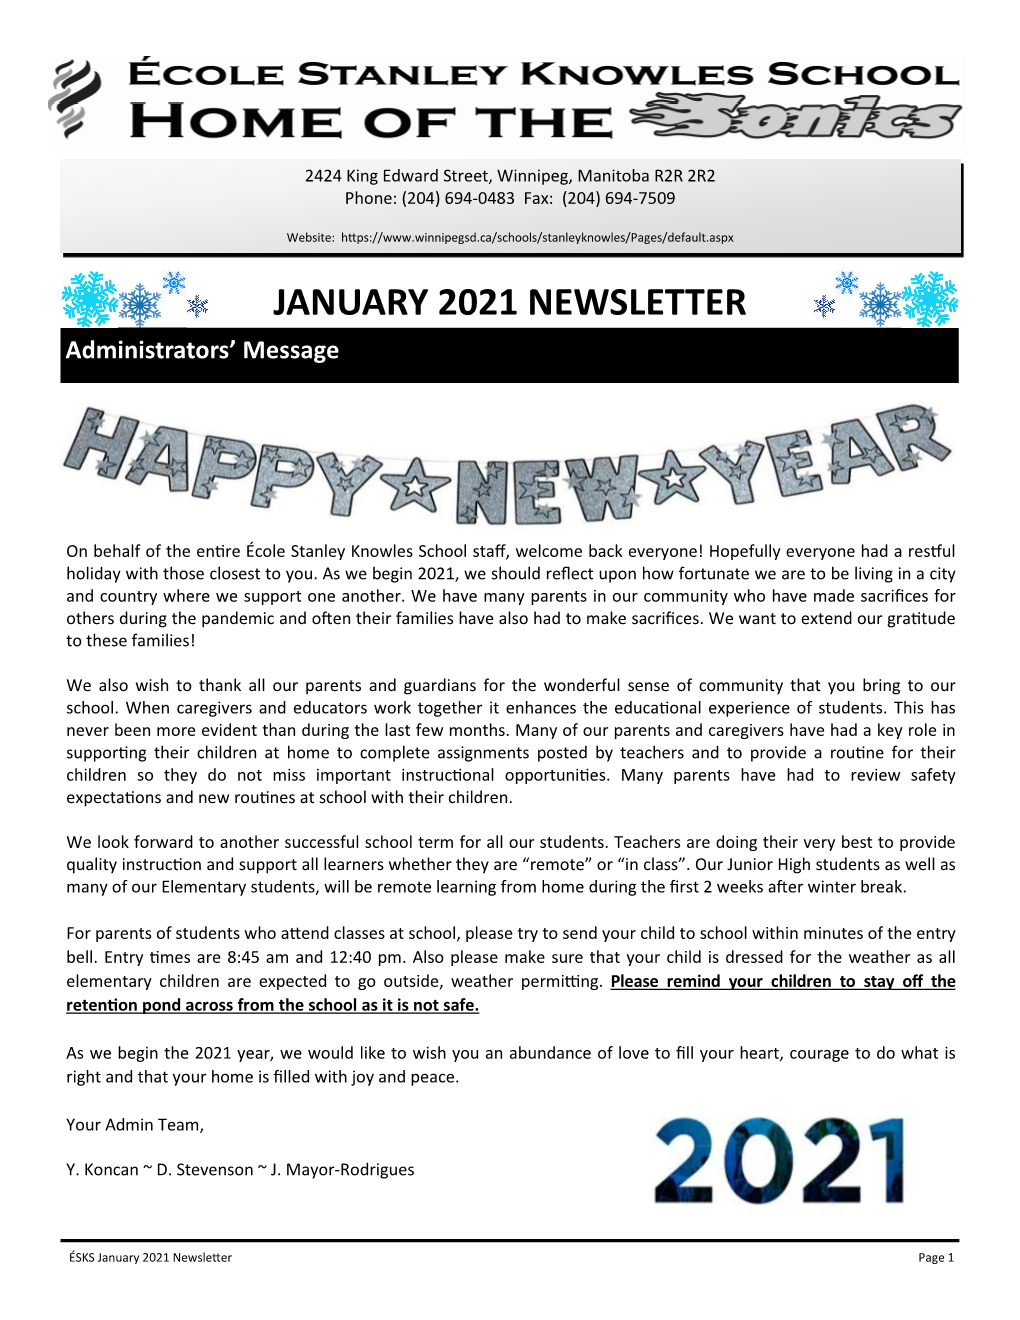 JANUARY 2021 Newsletter.Pub